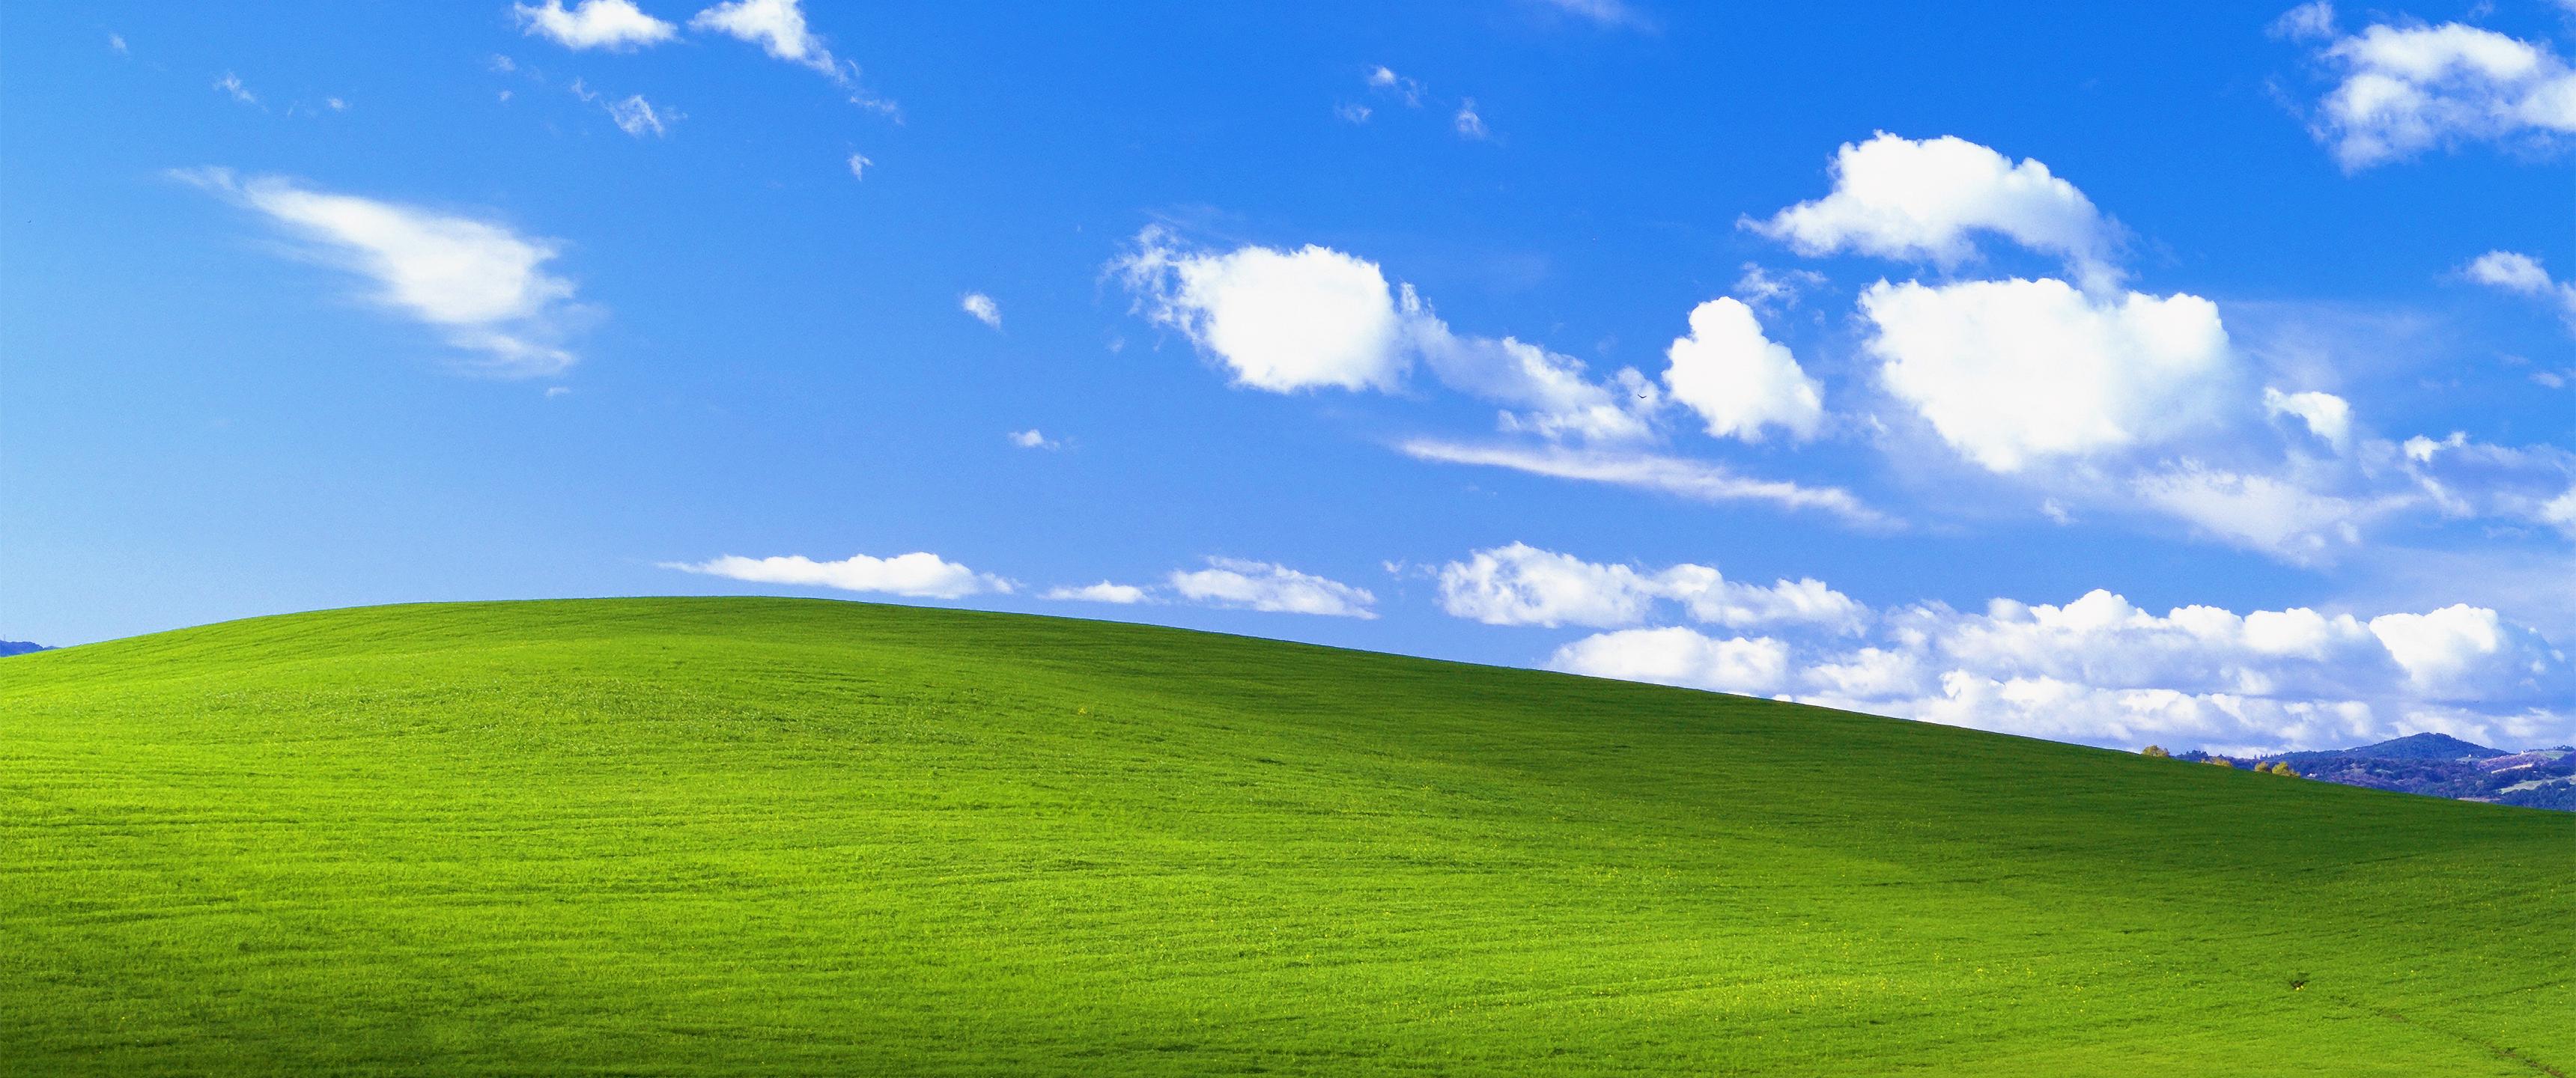 Windows XP High RES Bliss Wallpaper   Album on Imgur